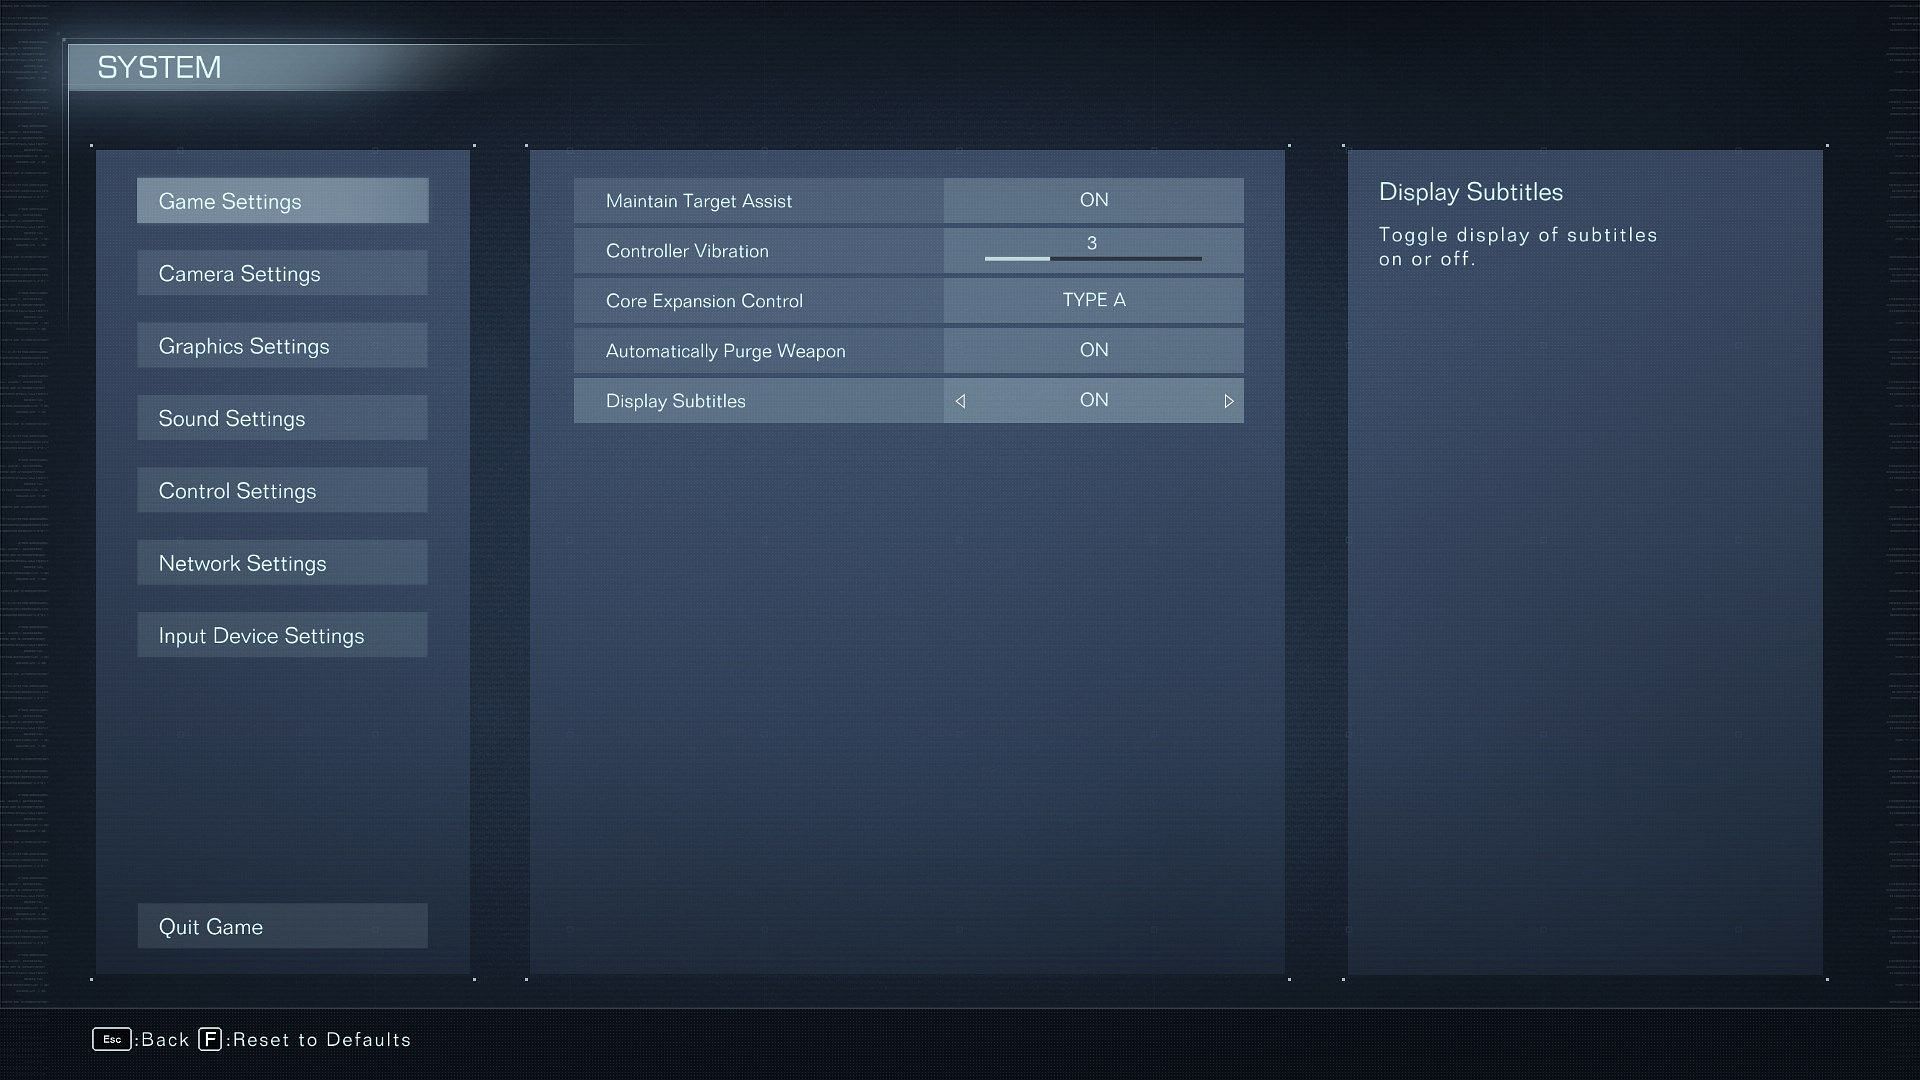 Game settings for Armored Core 6 (Image via Sportskeeda)